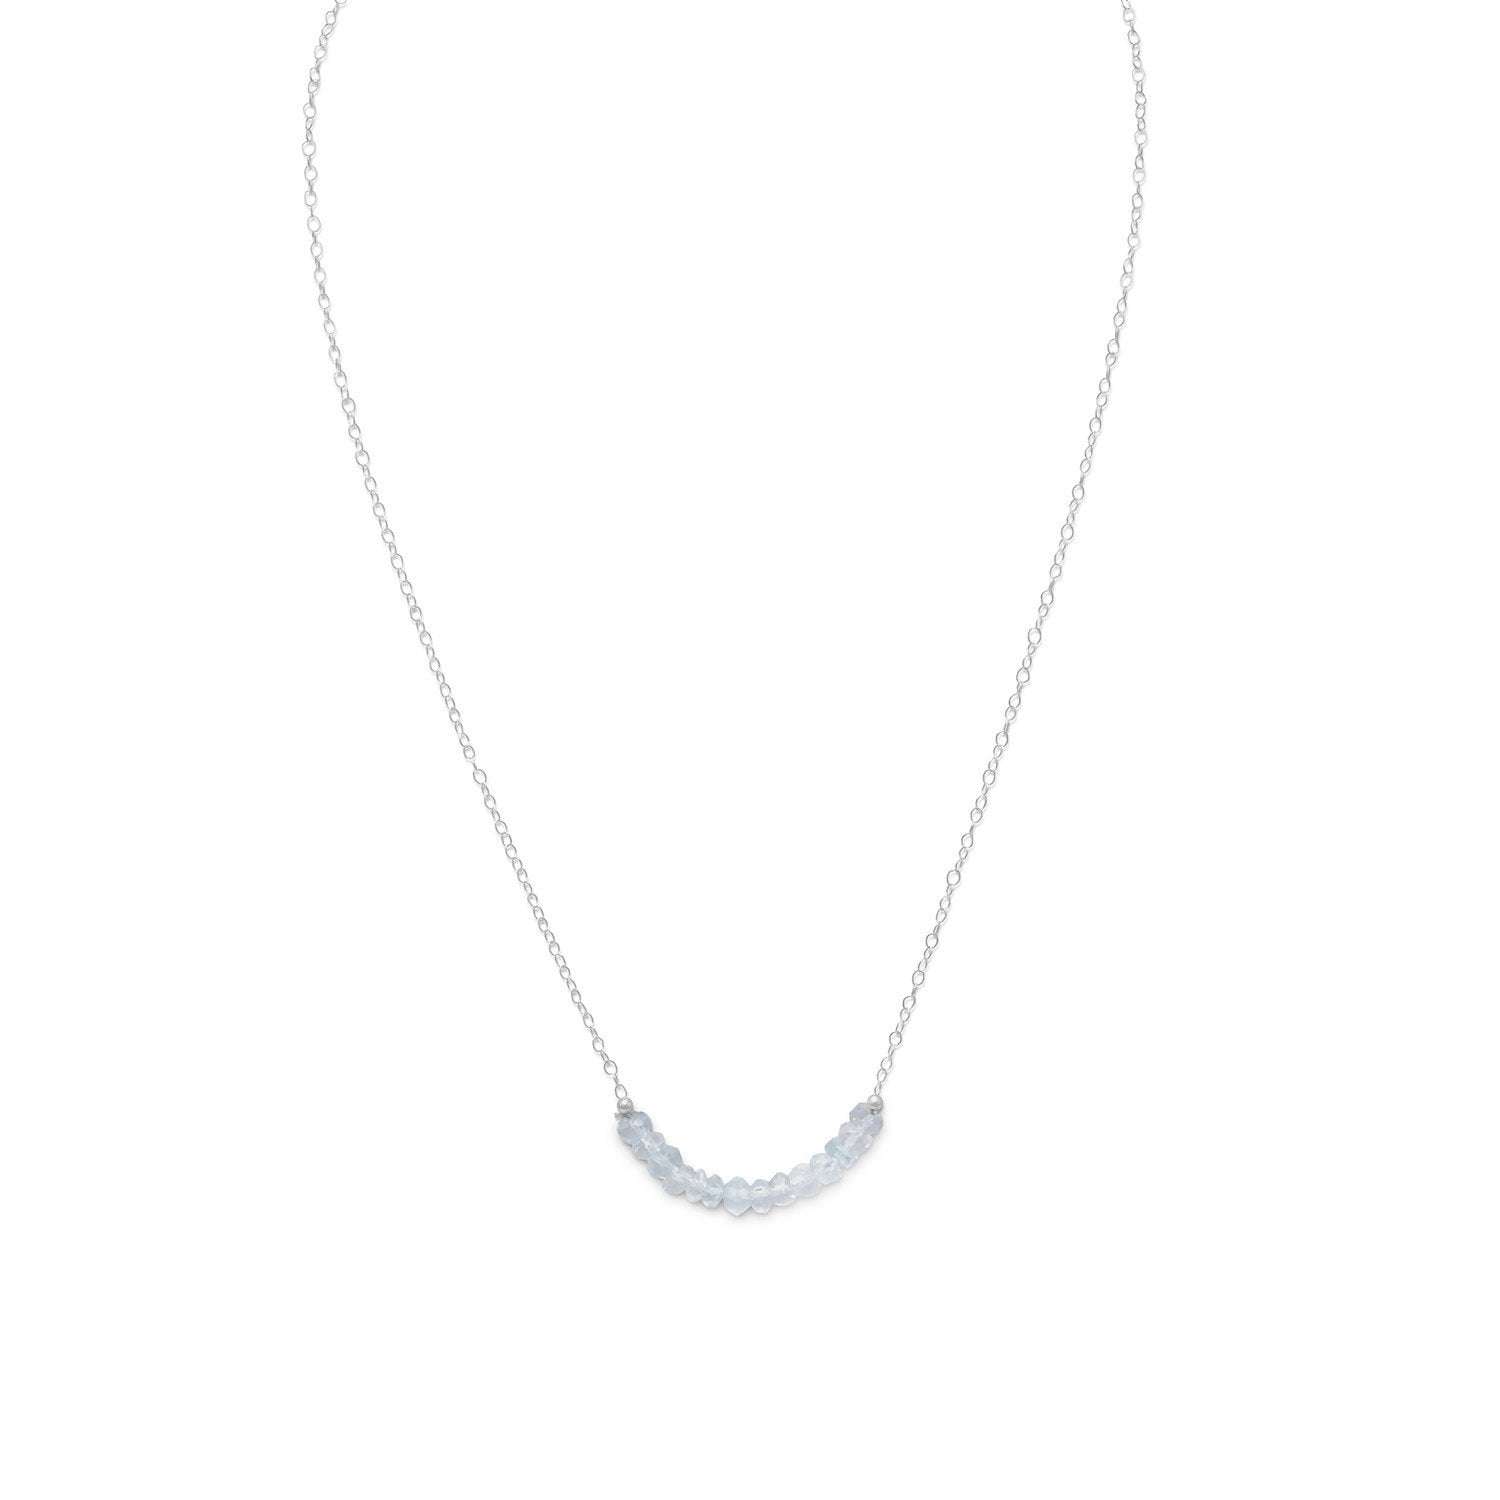 Faceted Aquamarine Bead Necklace - March Birthstone - Joyeria Lady